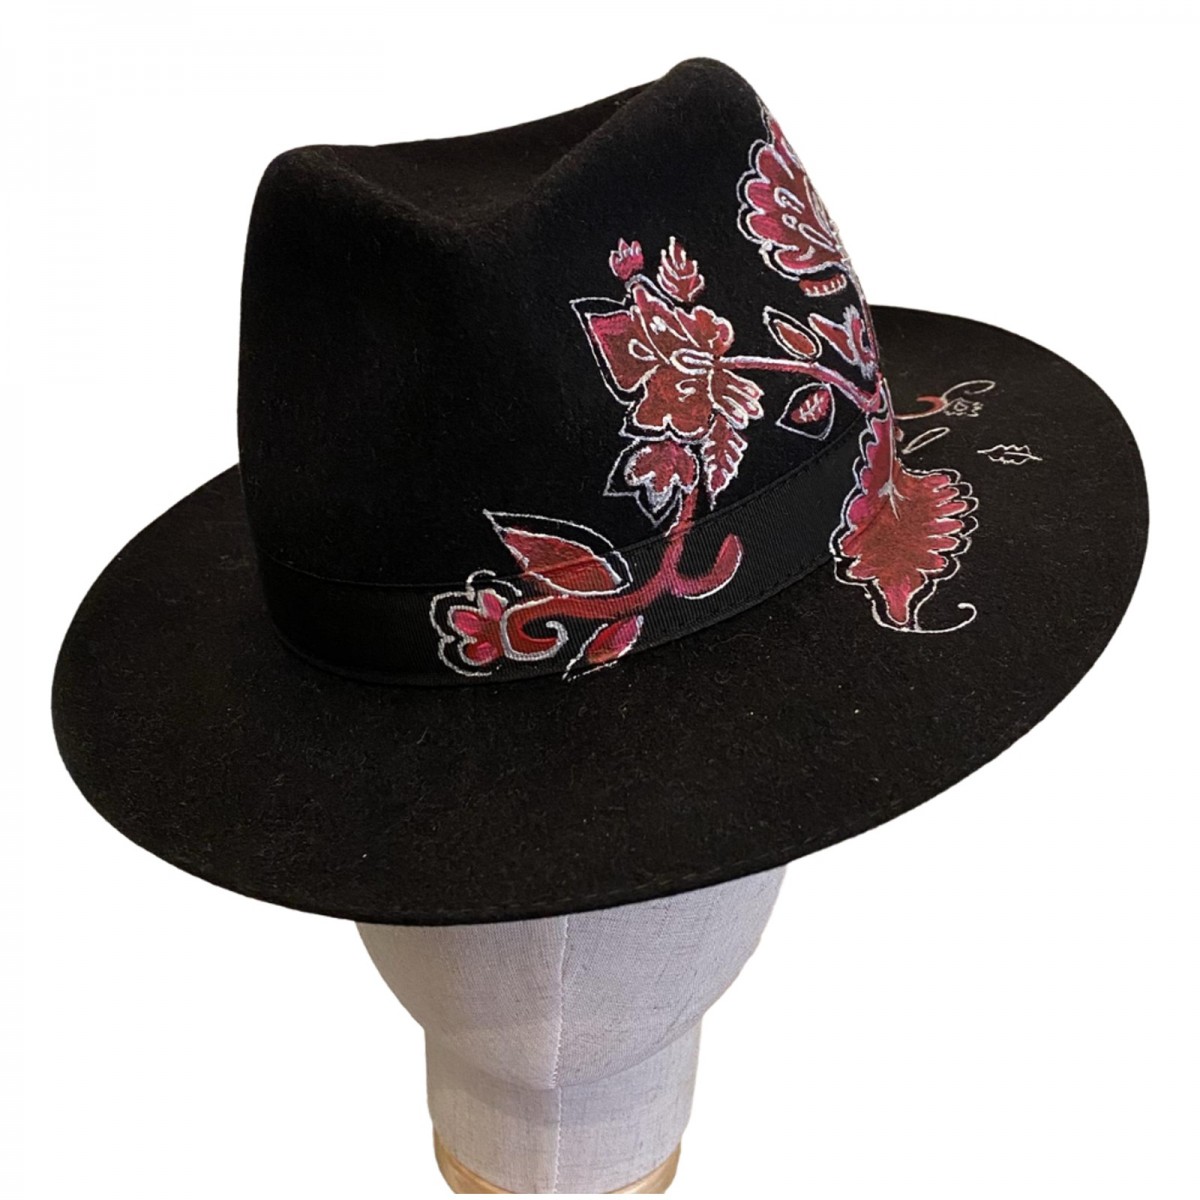 PANIZZA Fedora Pisa cappello 57 cm, Casentino lepre feltro